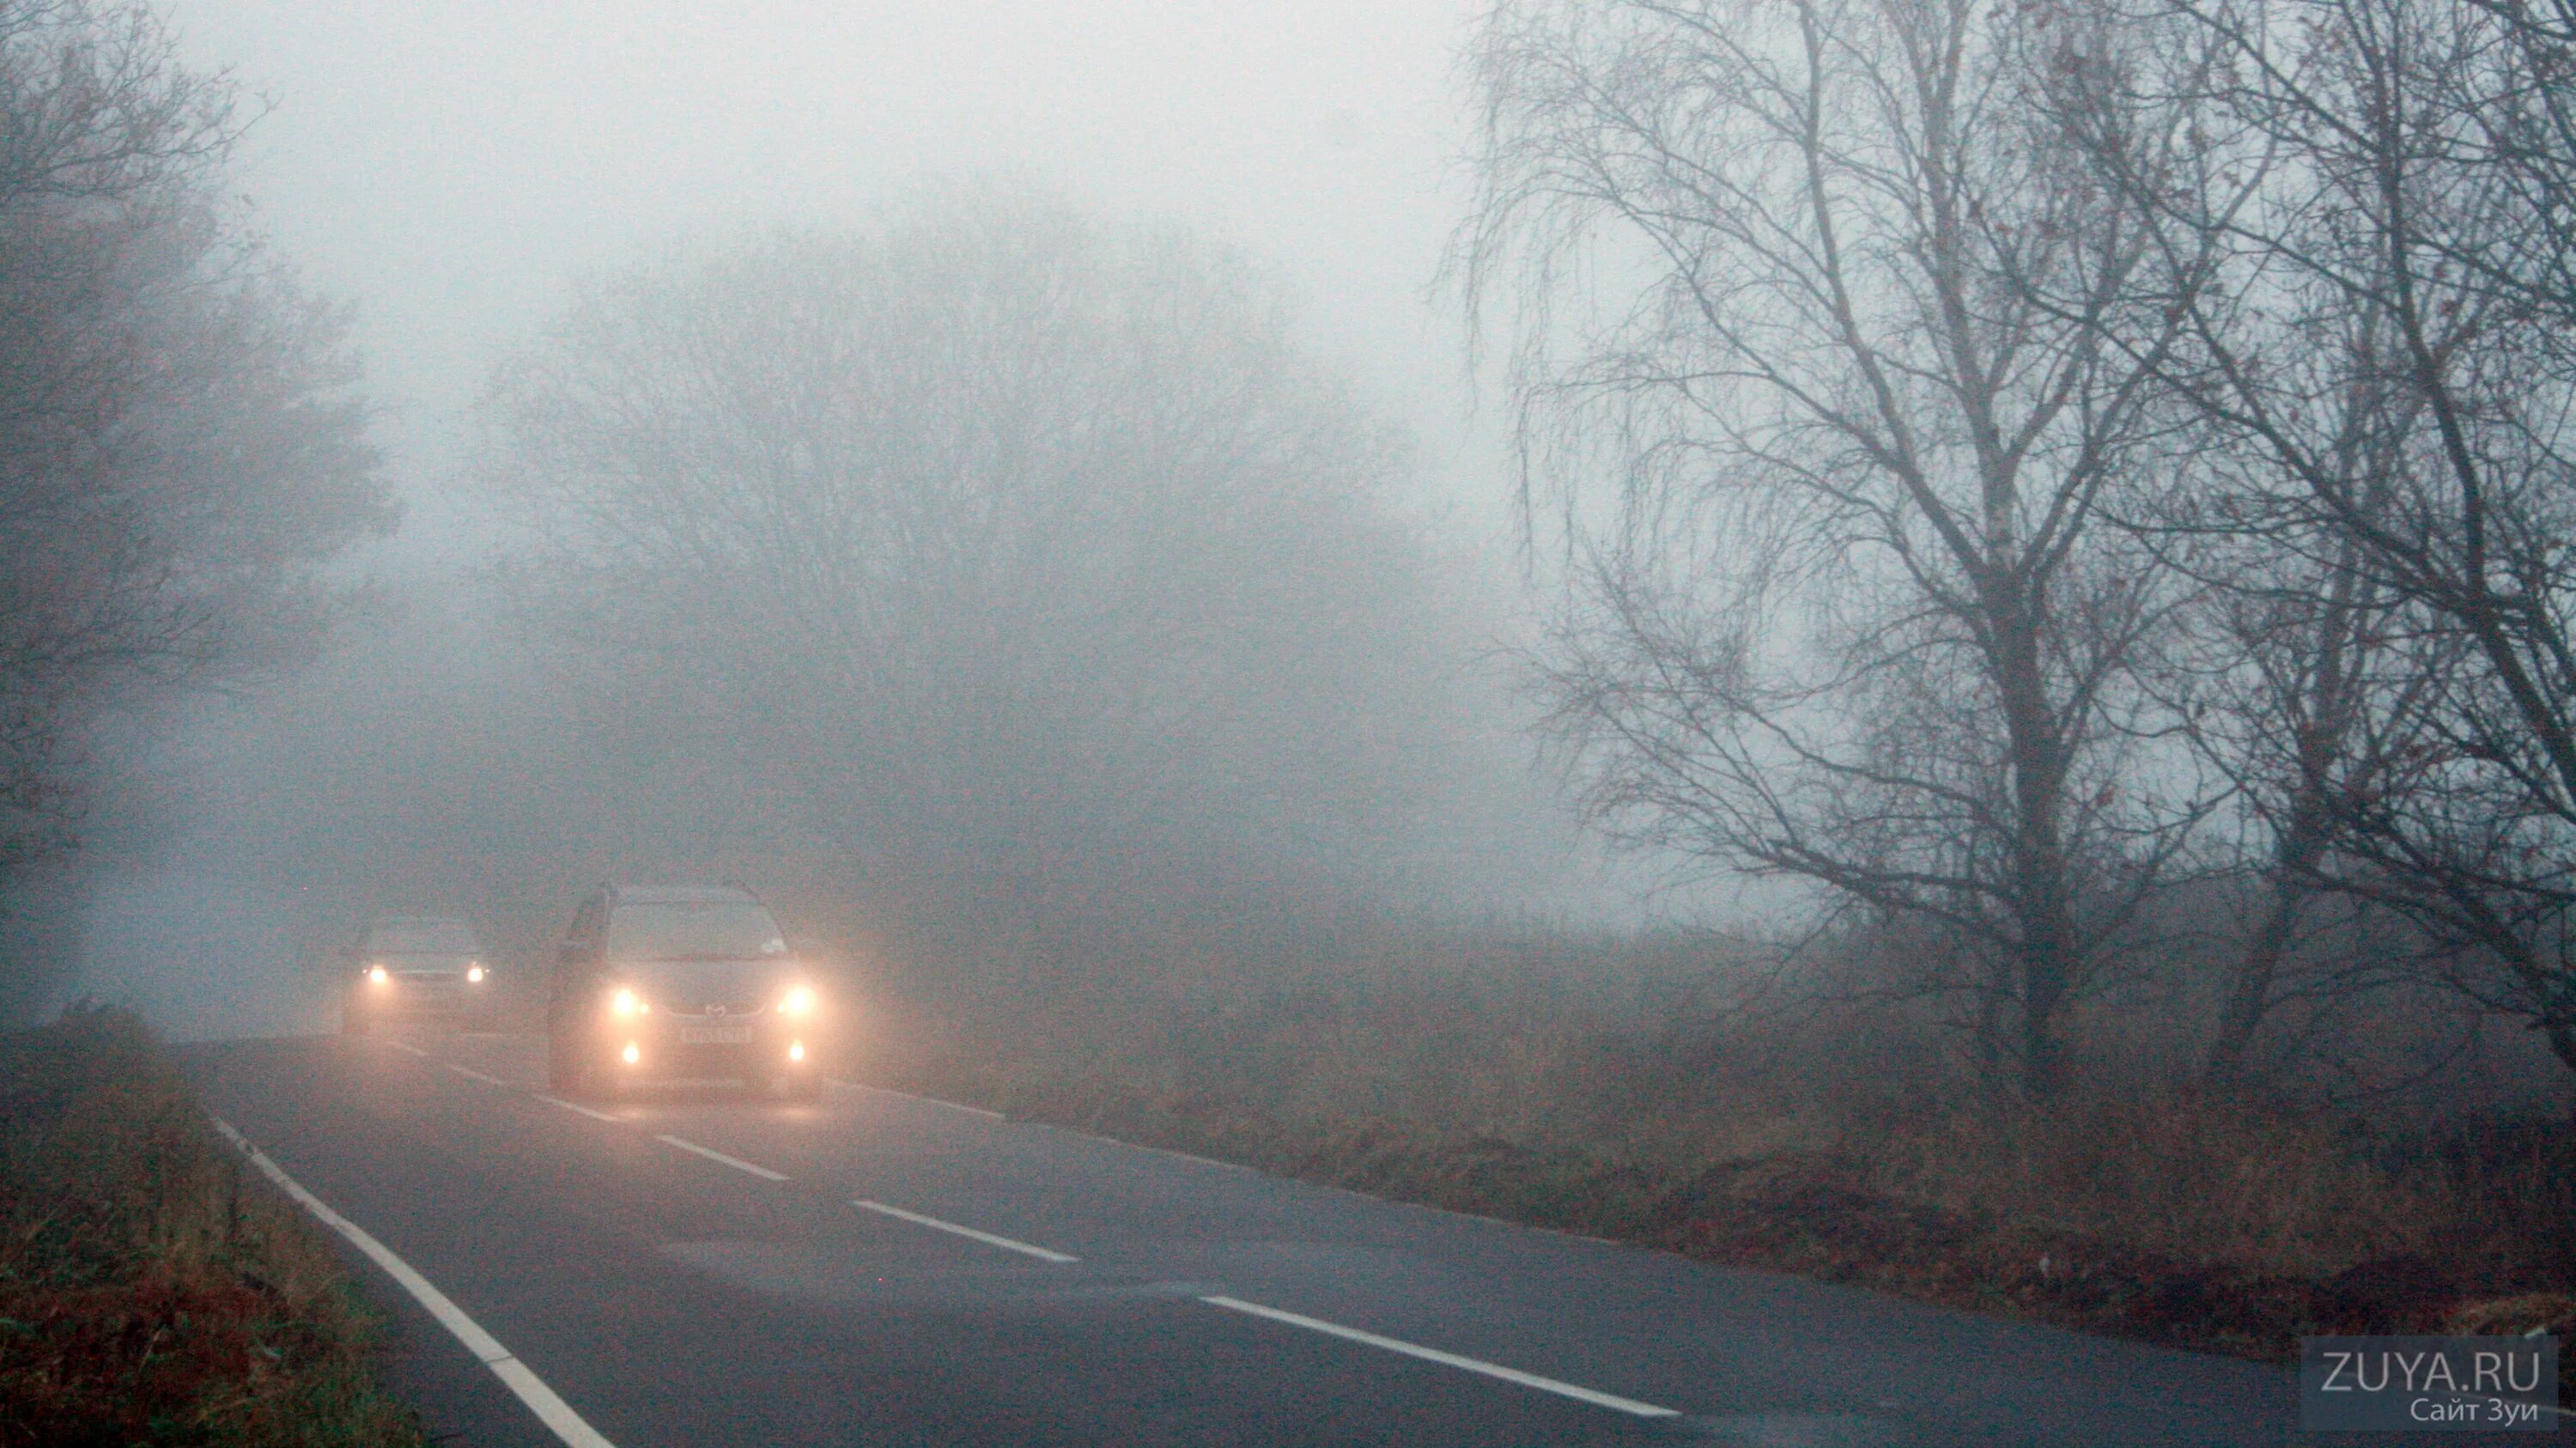 Условиях сильного тумана. Сильный туман. Сильный туман на дороге. Предупреждение туман. Foggy weather.